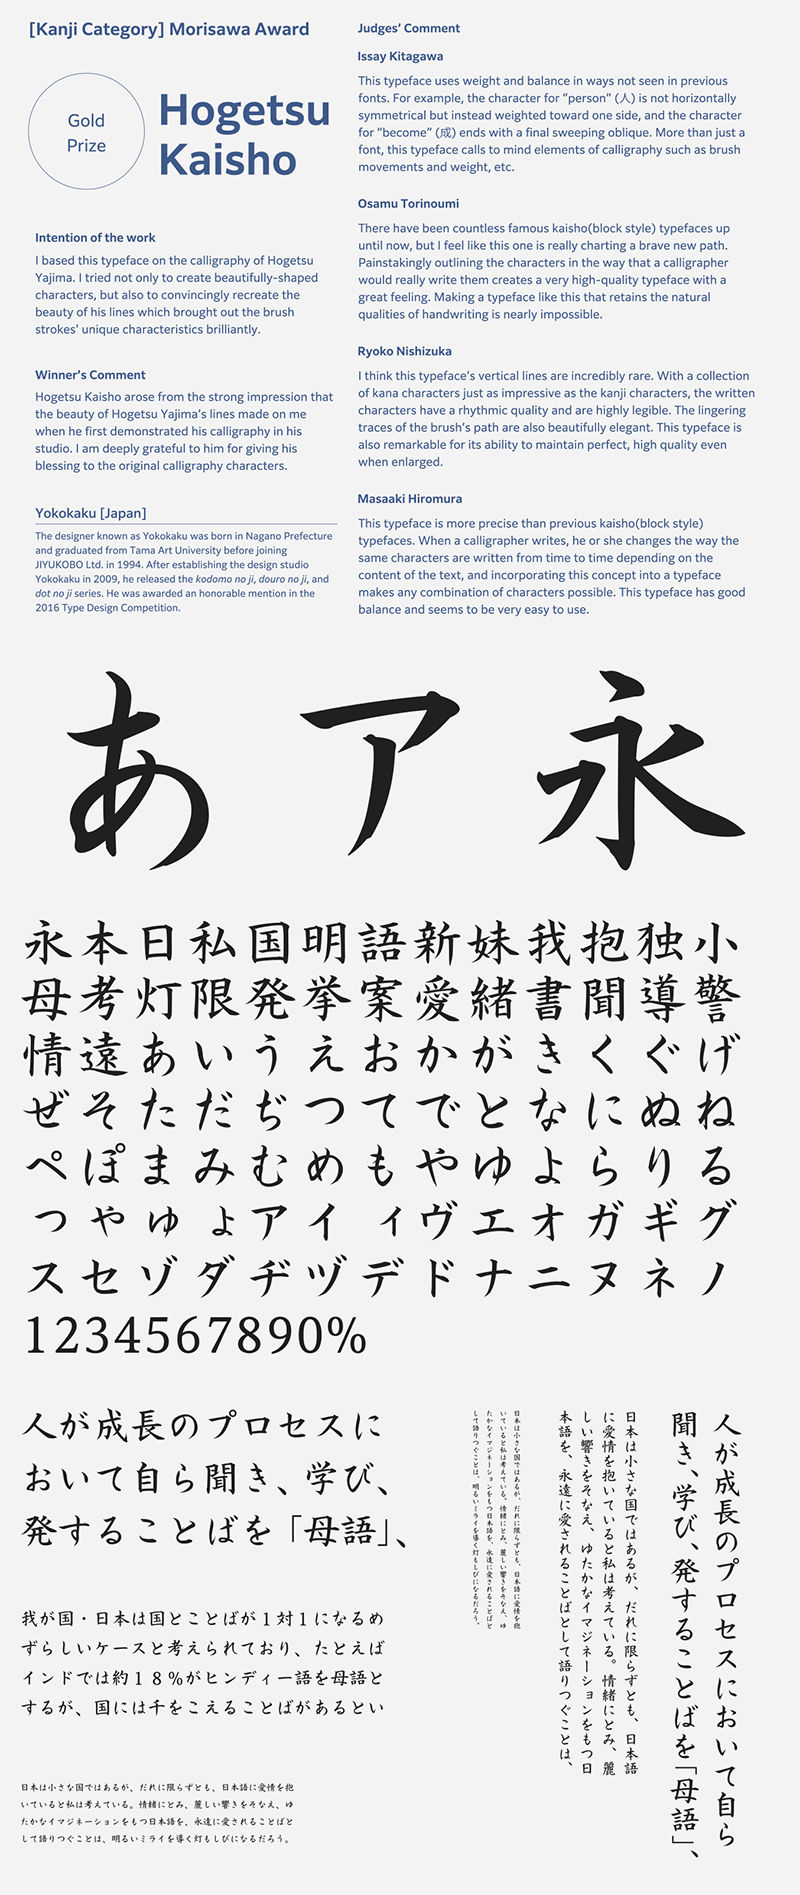 ​​​​​​​Morisawa Type Design Competition